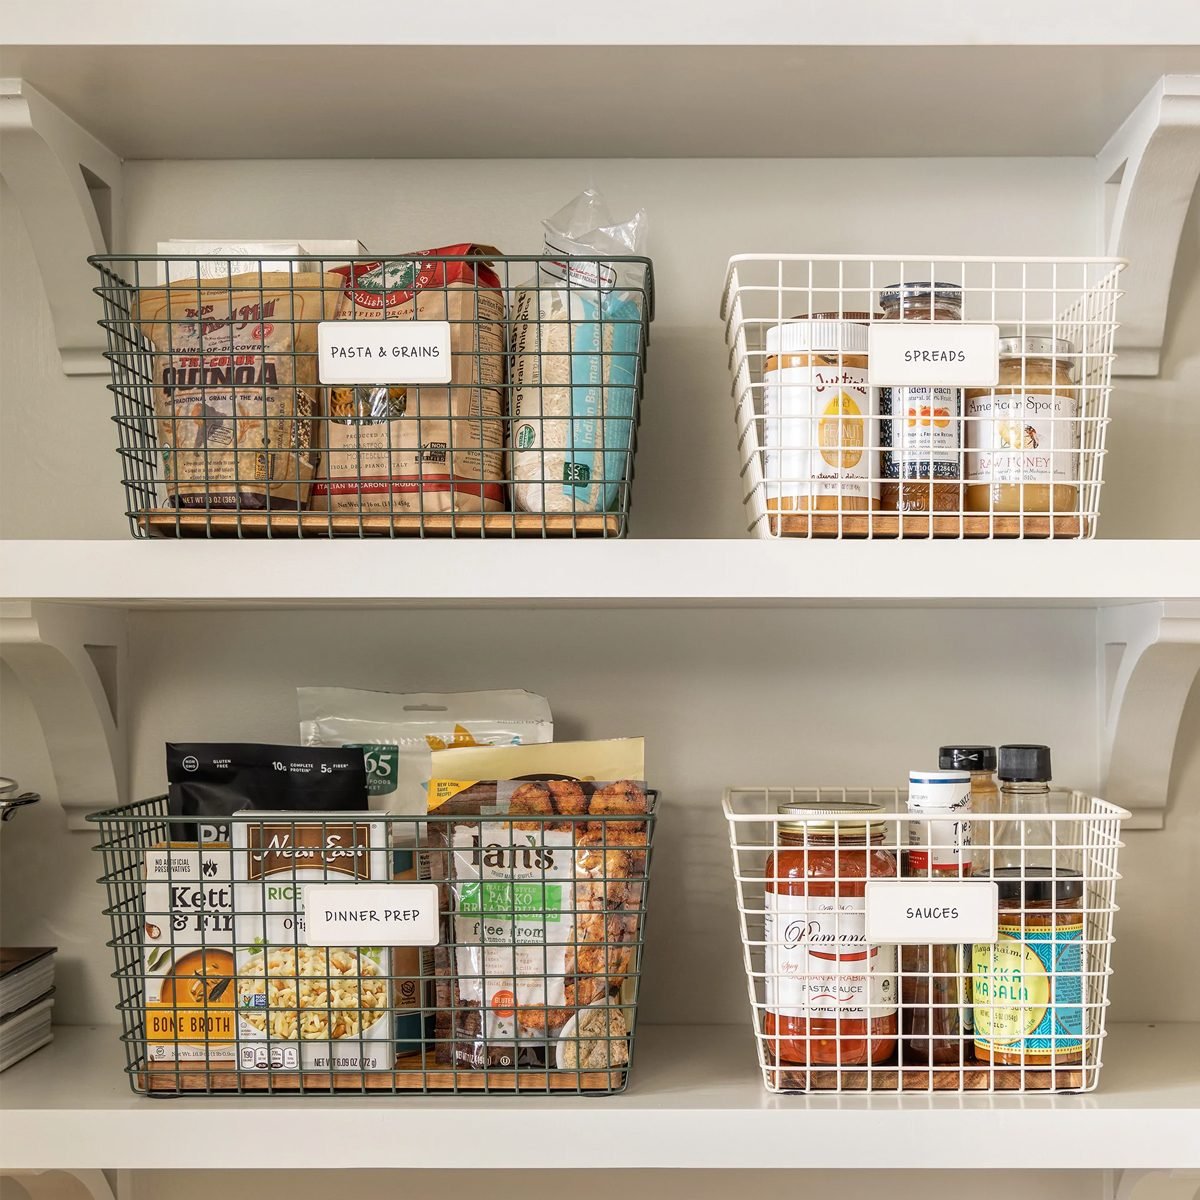 Organizational Baskets Optimize Pantry Storage - Soul & Lane